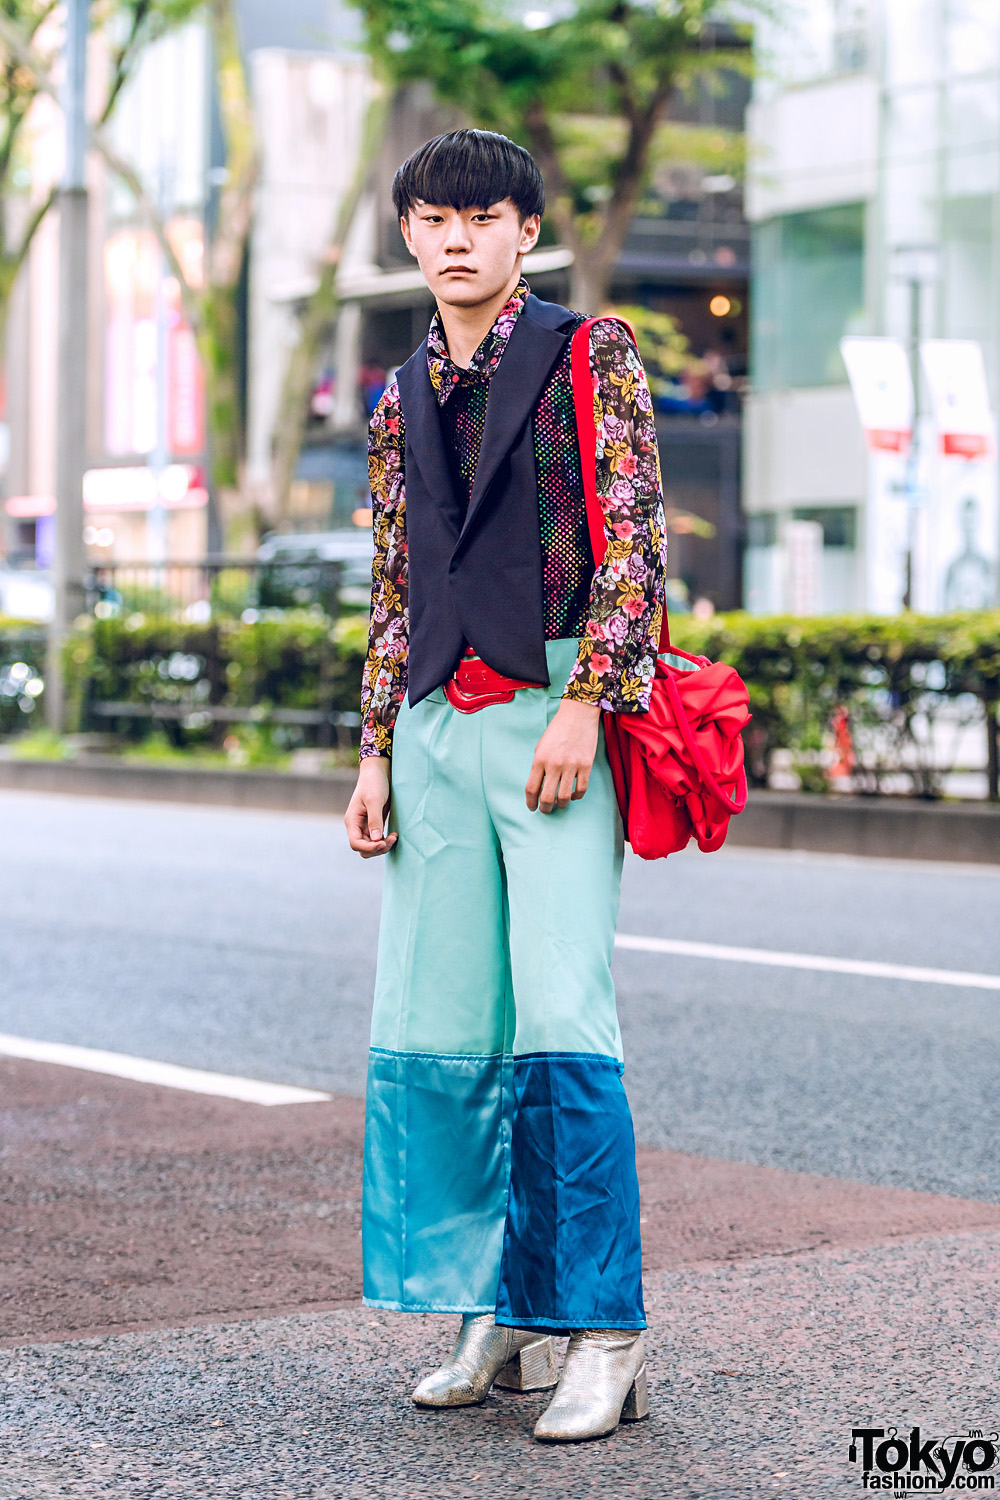 Japanese Eclectic Street Style w/ Floral Print Shirt, Shin Mesh Blazer ...